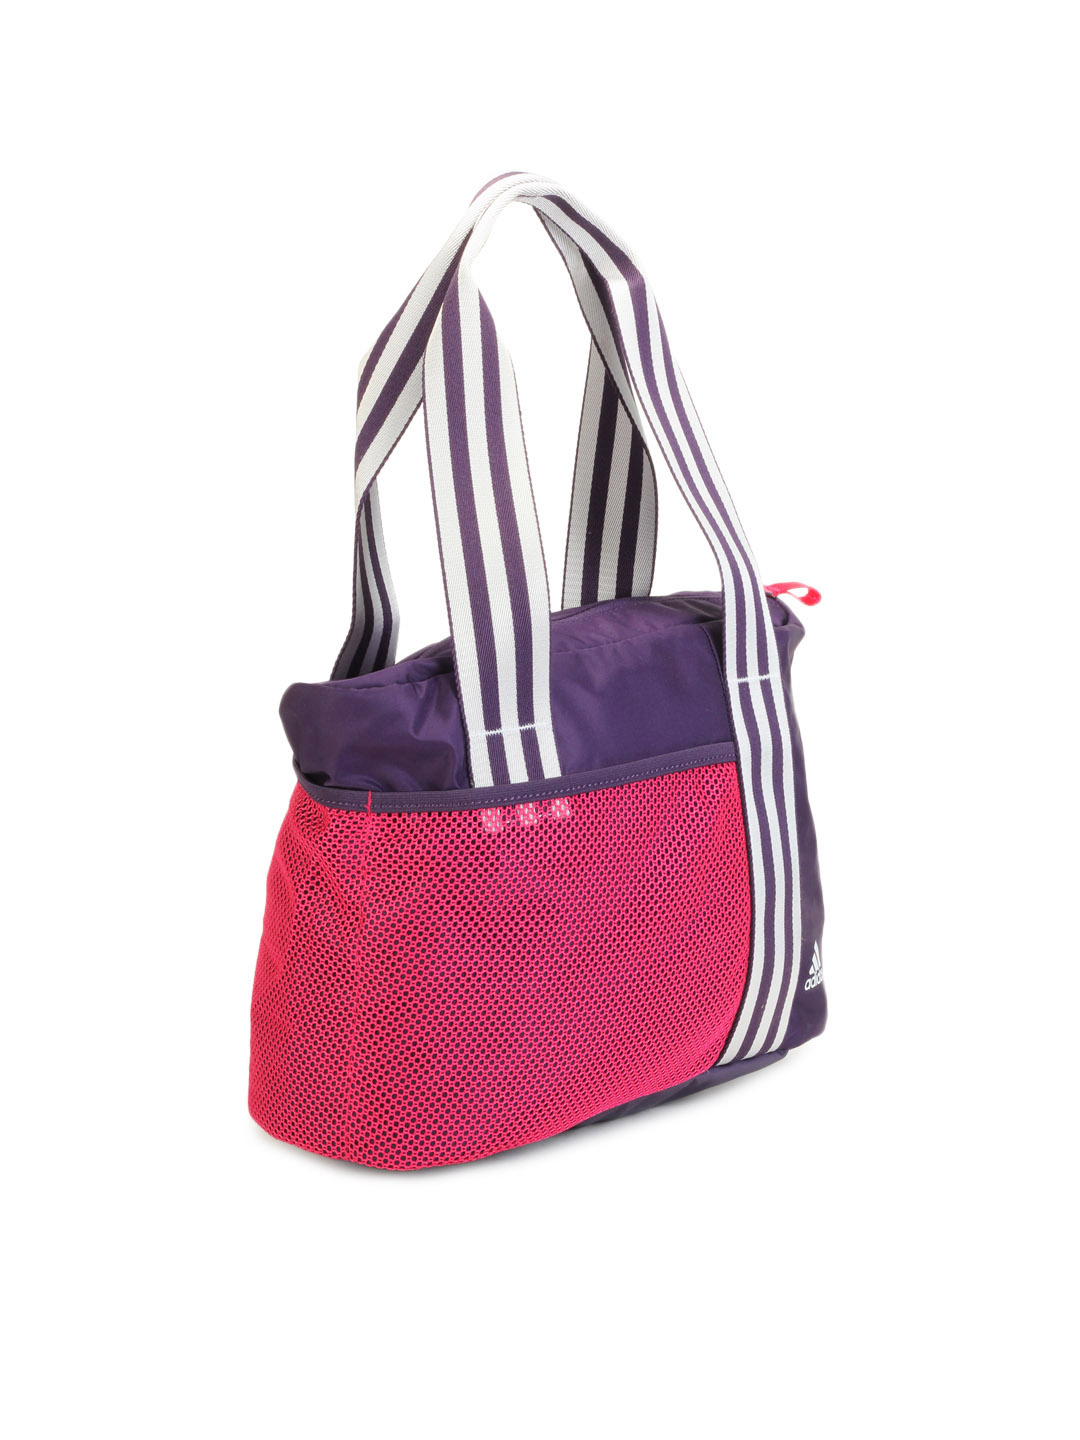 Adidas Bag Purple